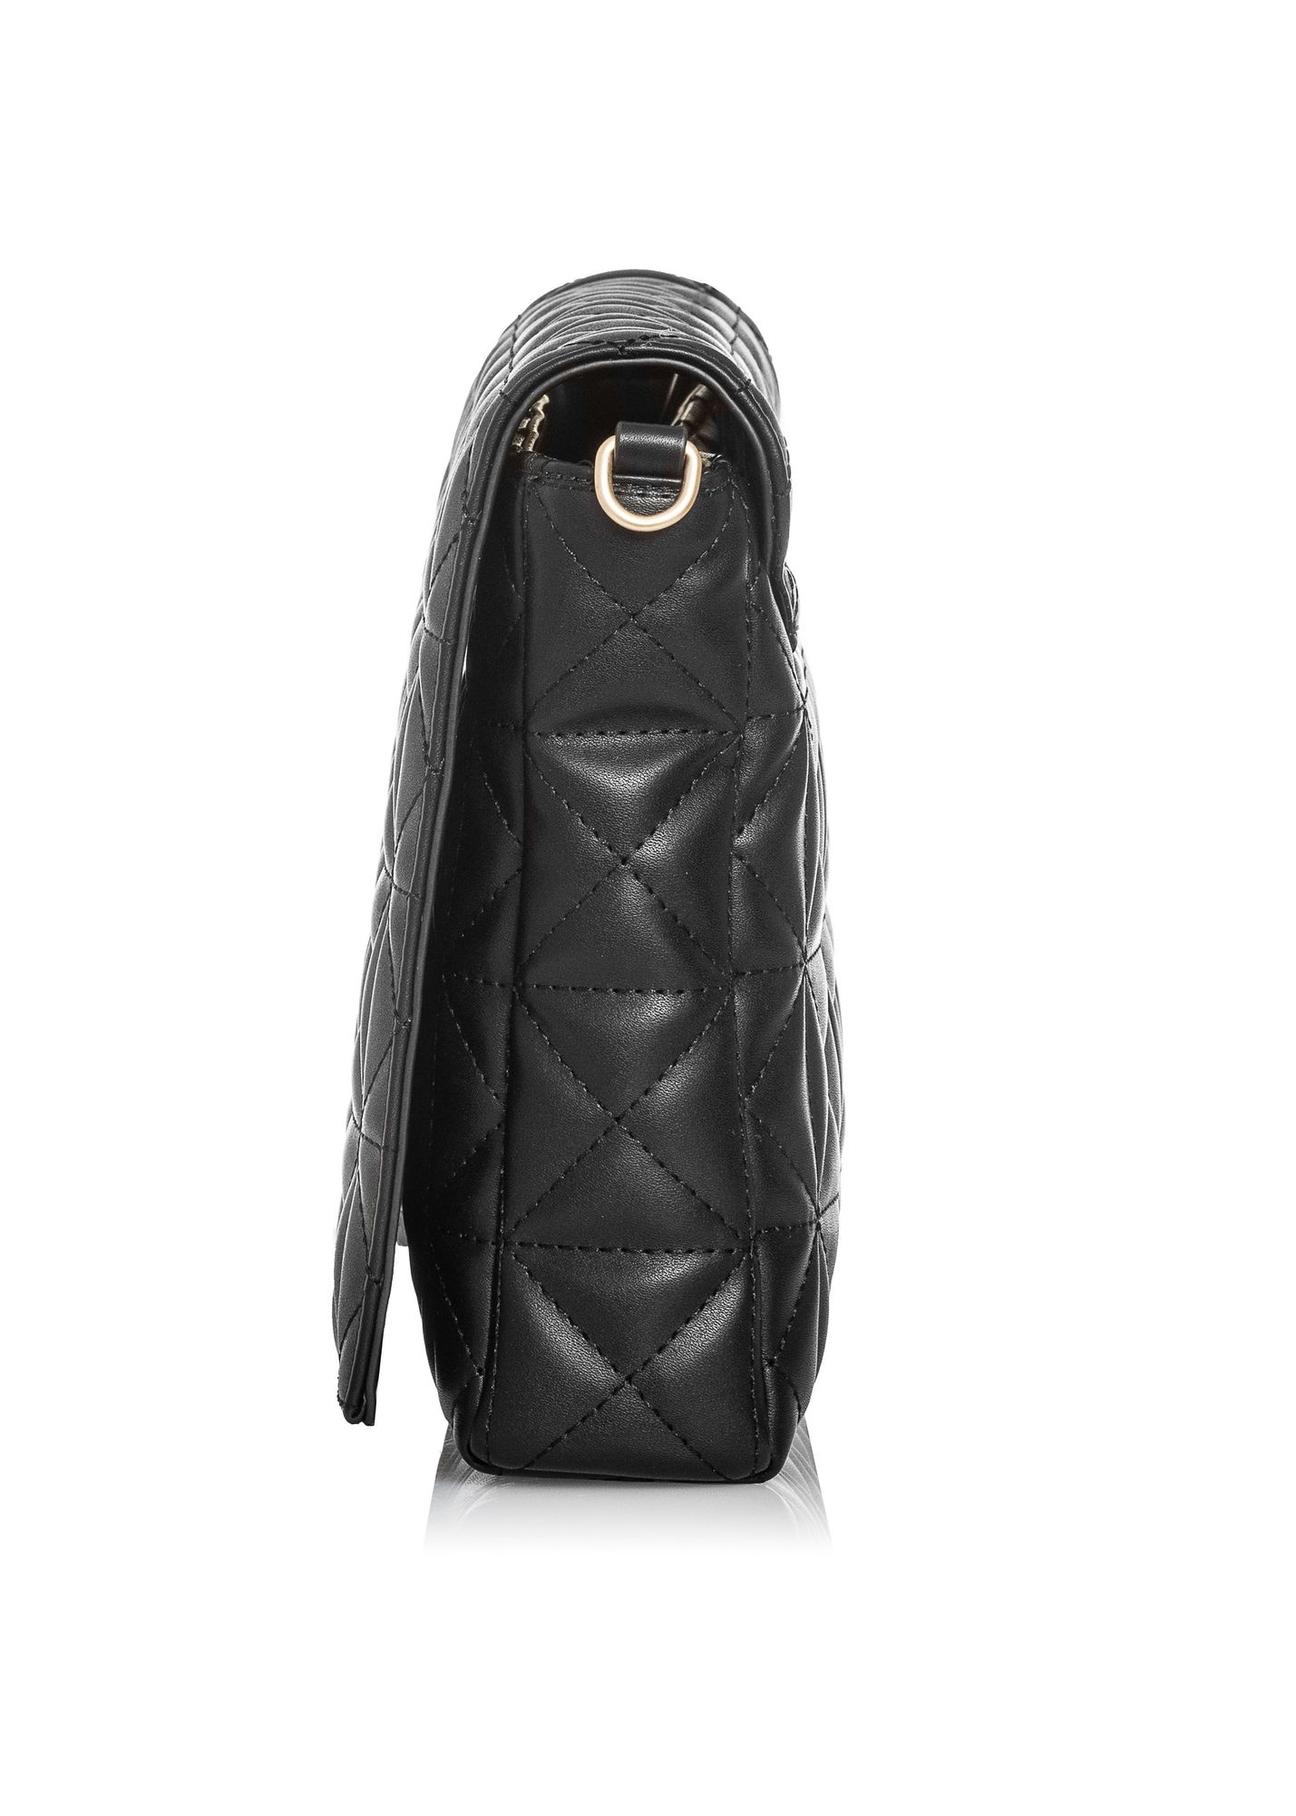 Czarna pikowana torebka damska TOREC-0849-99(Z23)